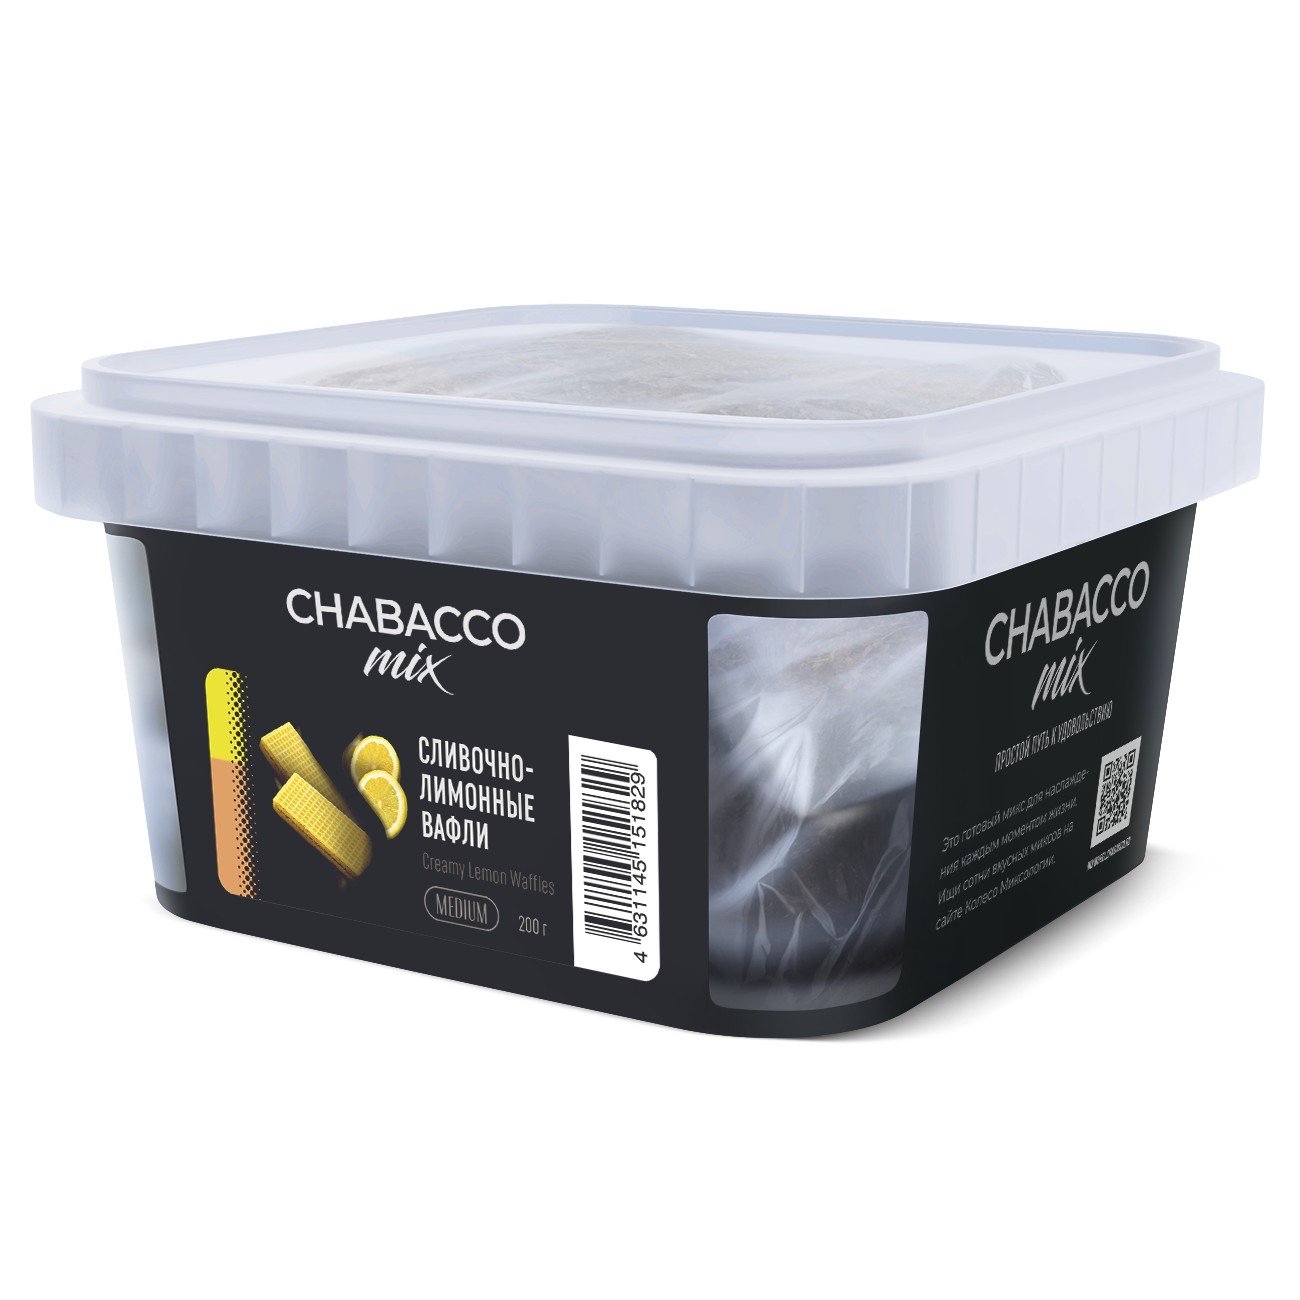 Chabacco - MIX - CREAMY LEMON Waffles ( сливочно - лимоннные вафли ) - 200 g